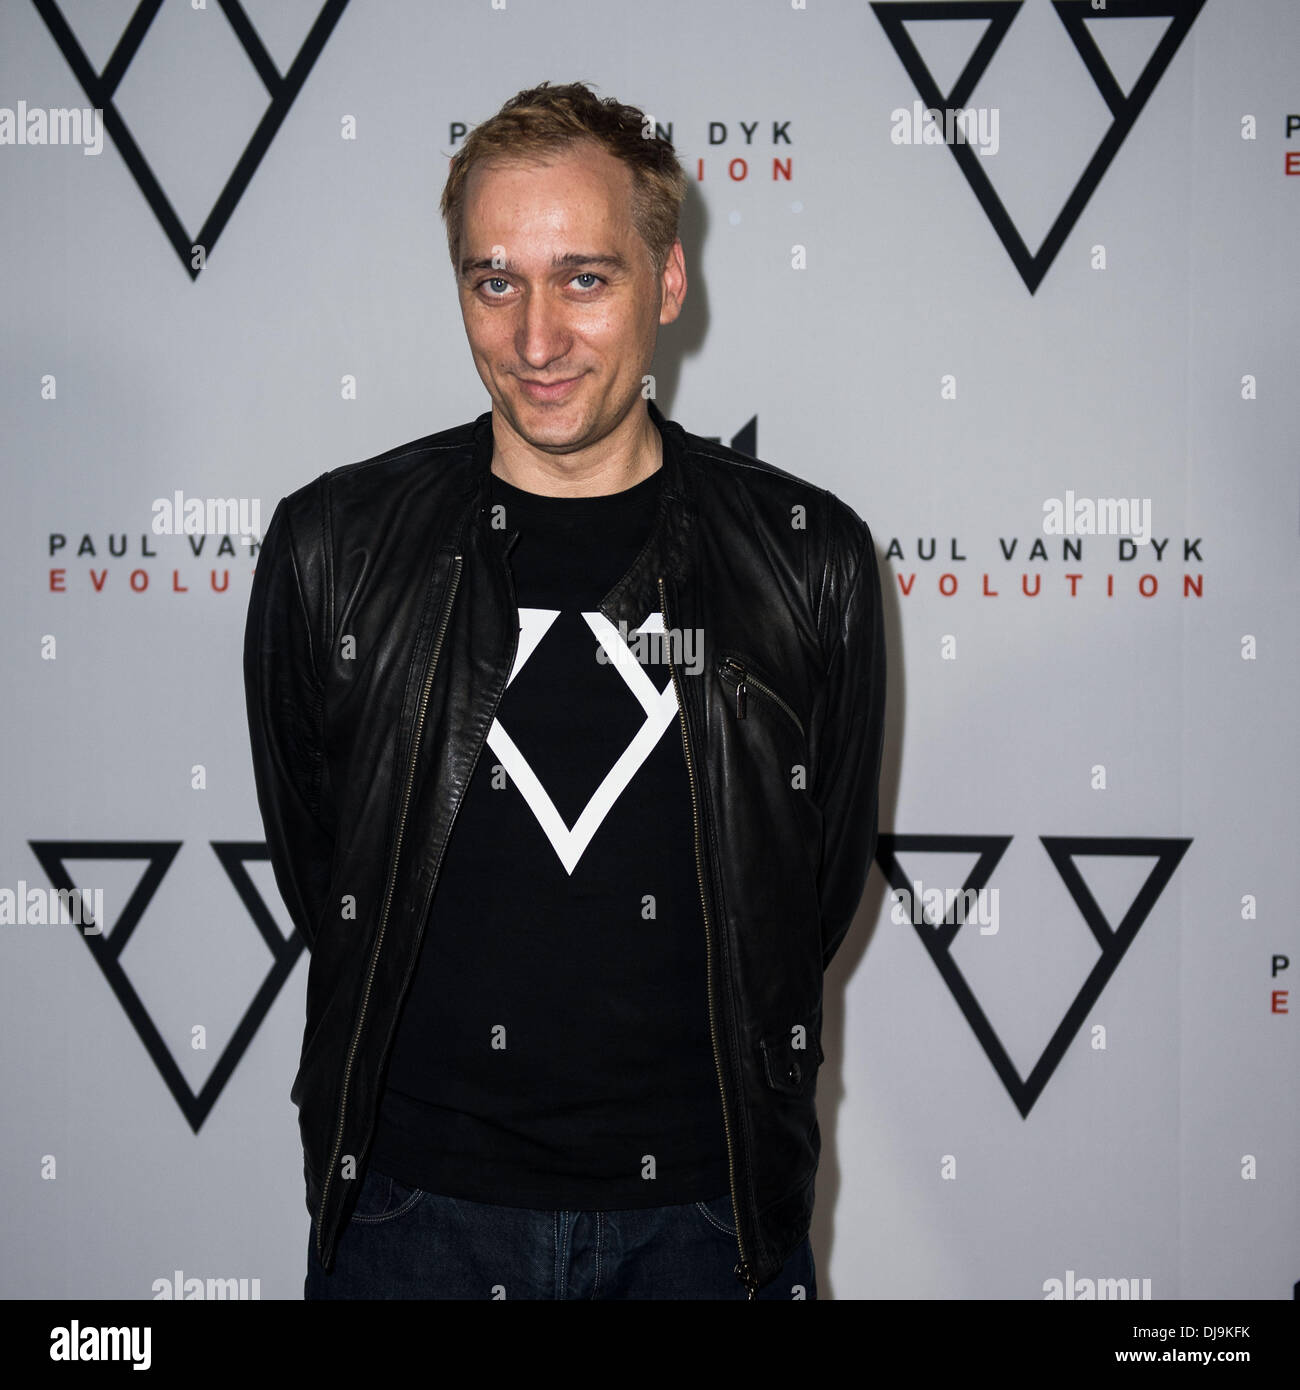 Paul Van Dyk at the launch of Paul van Dyk's new album "Evolultion" at  Arena Klub. Berlin, Germany - 05.05.2012 Stock Photo - Alamy